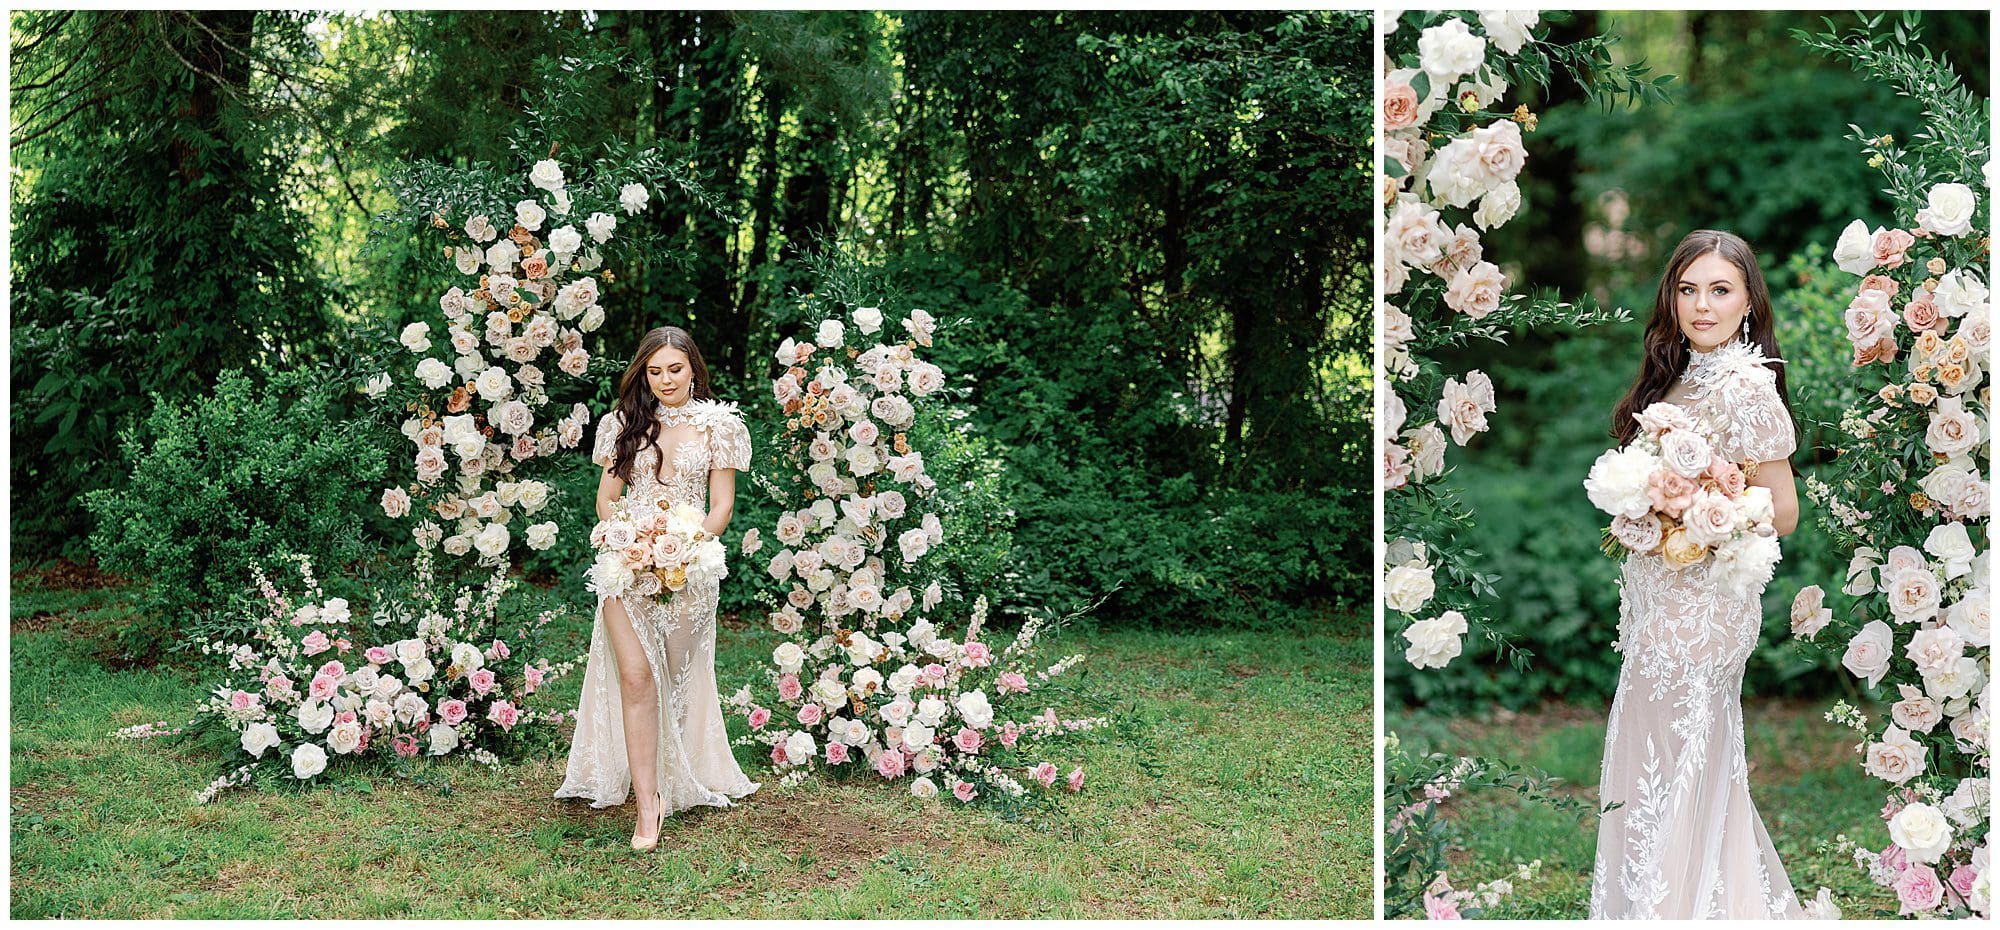 A bride posing in front of a rose garden.